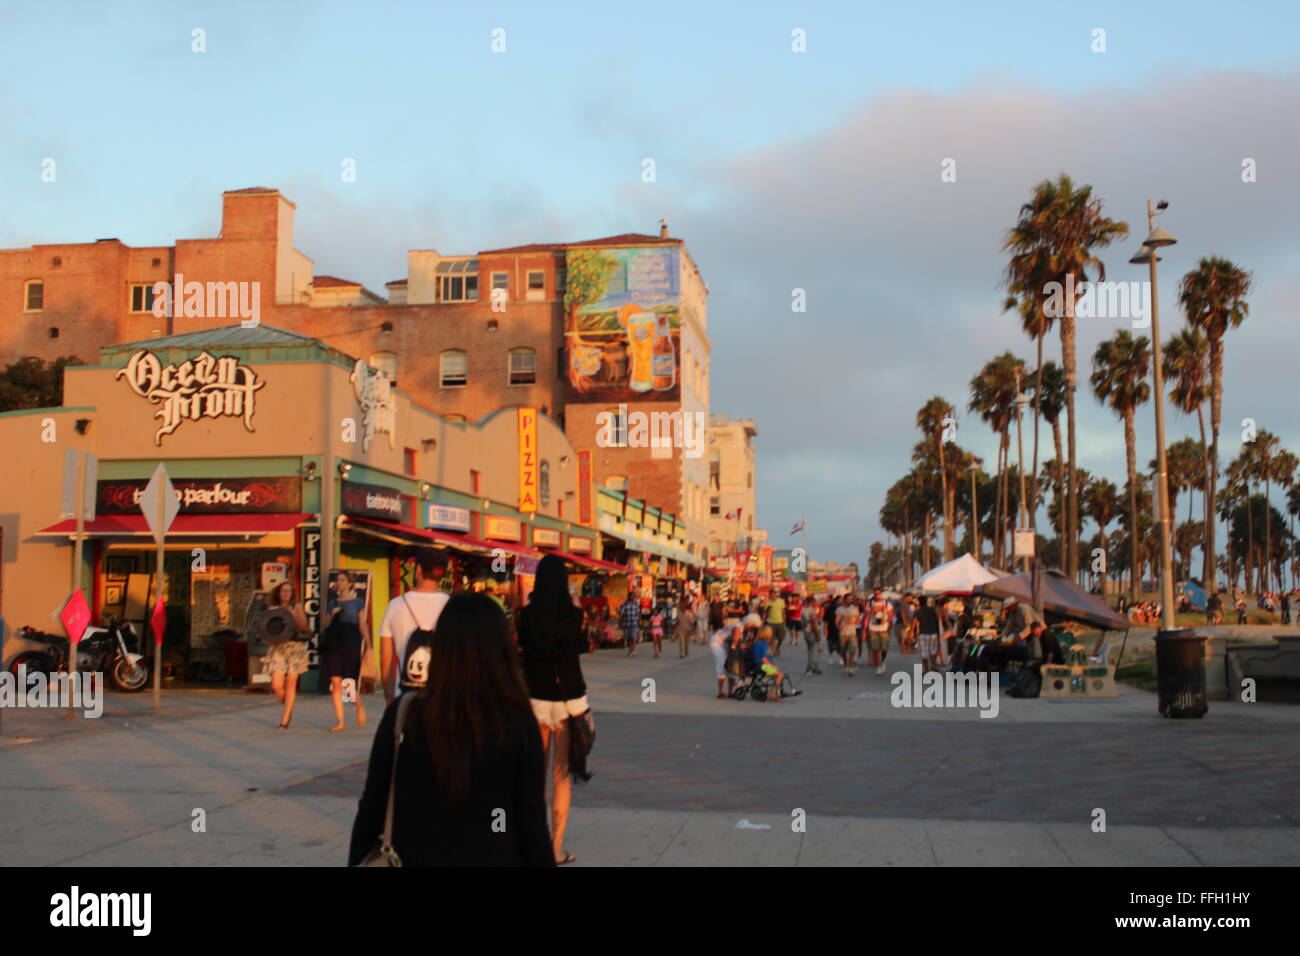 Venice beach boardwalk in Los Angeles Stock Photo - Alamy